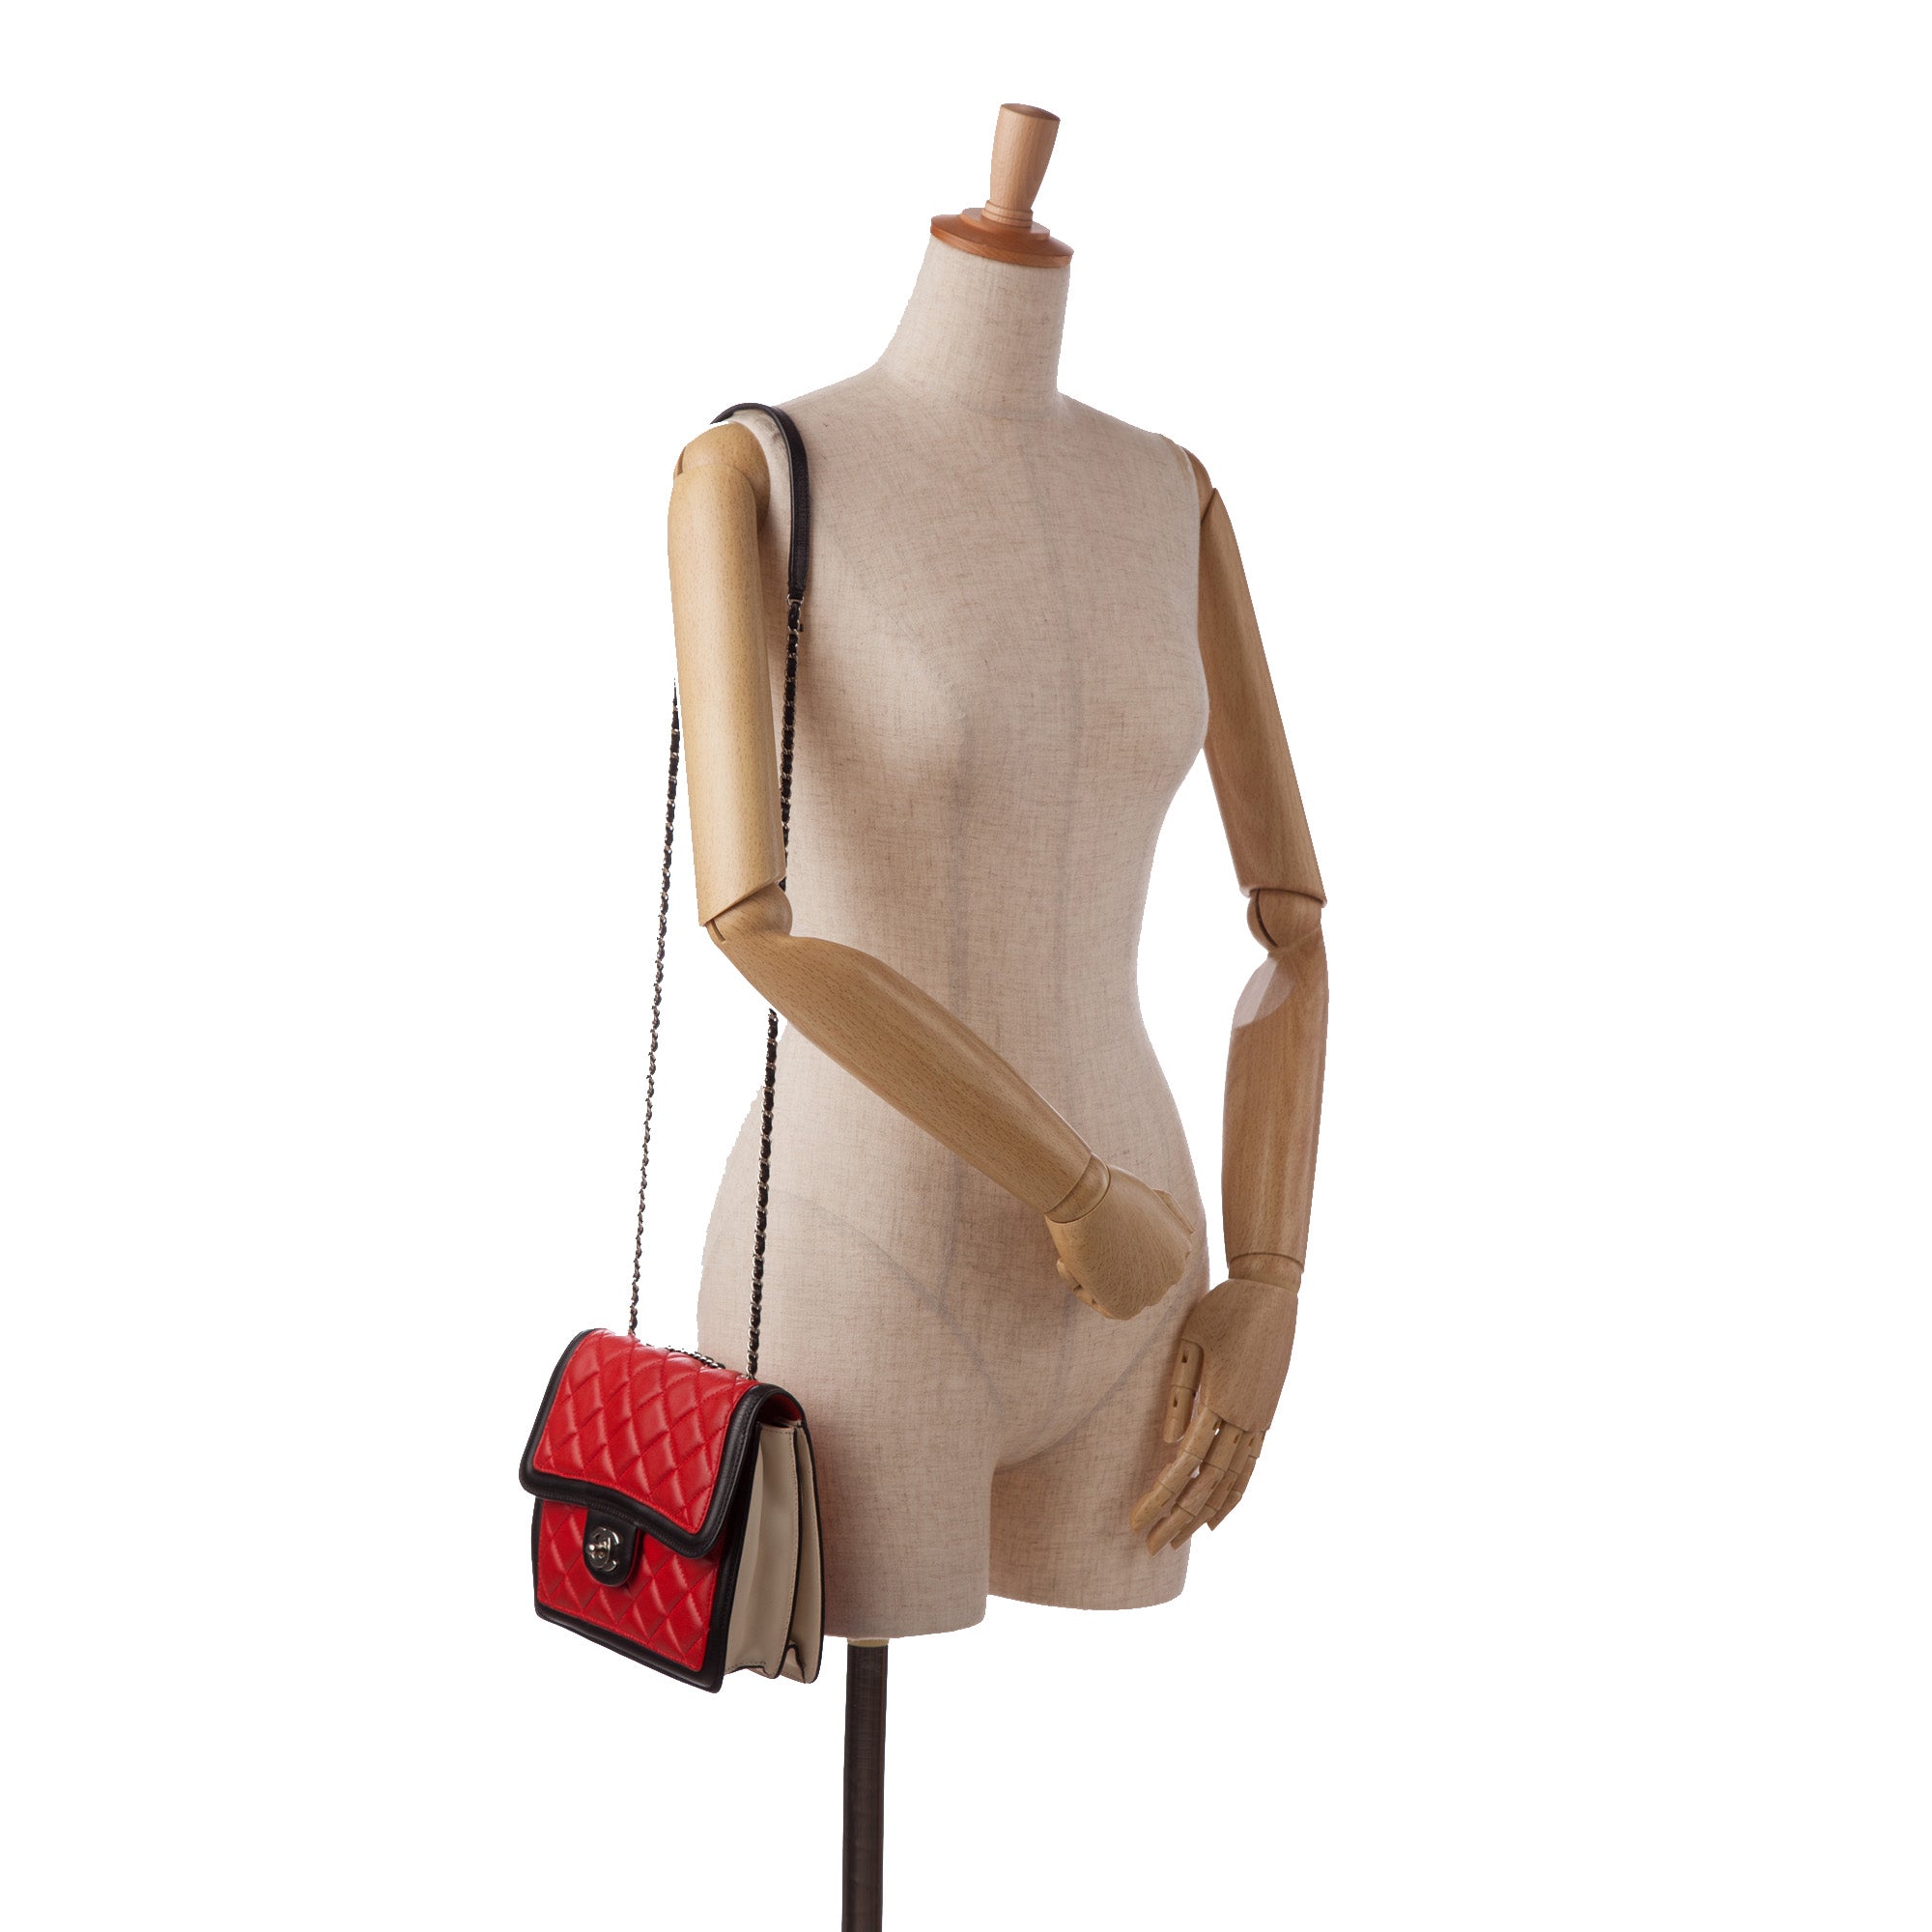 Chanel Red Mini Square Graphic Flap Crossbody Bag